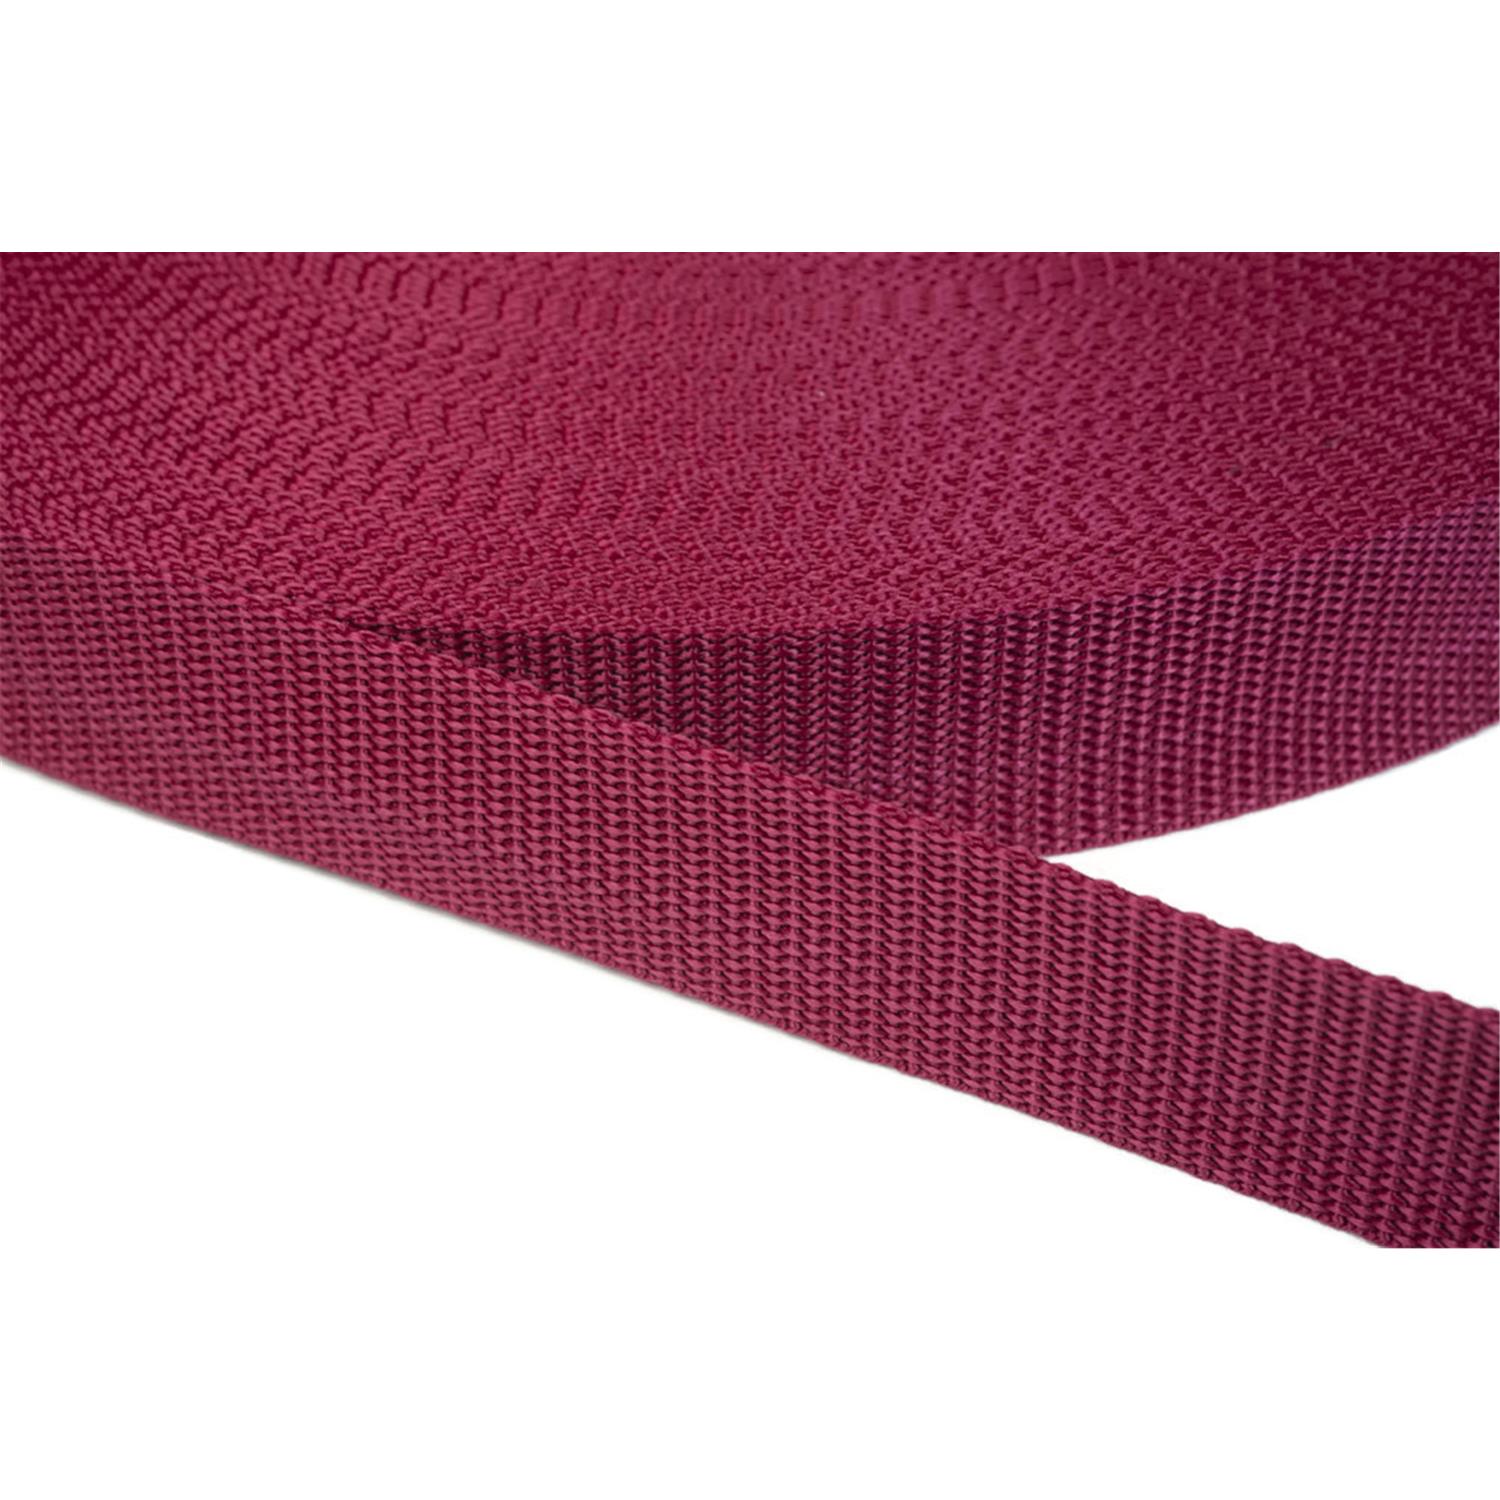 Gurtband 10mm breit aus Polypropylen in 41 Farben 21 - dunkelrot 50 Meter